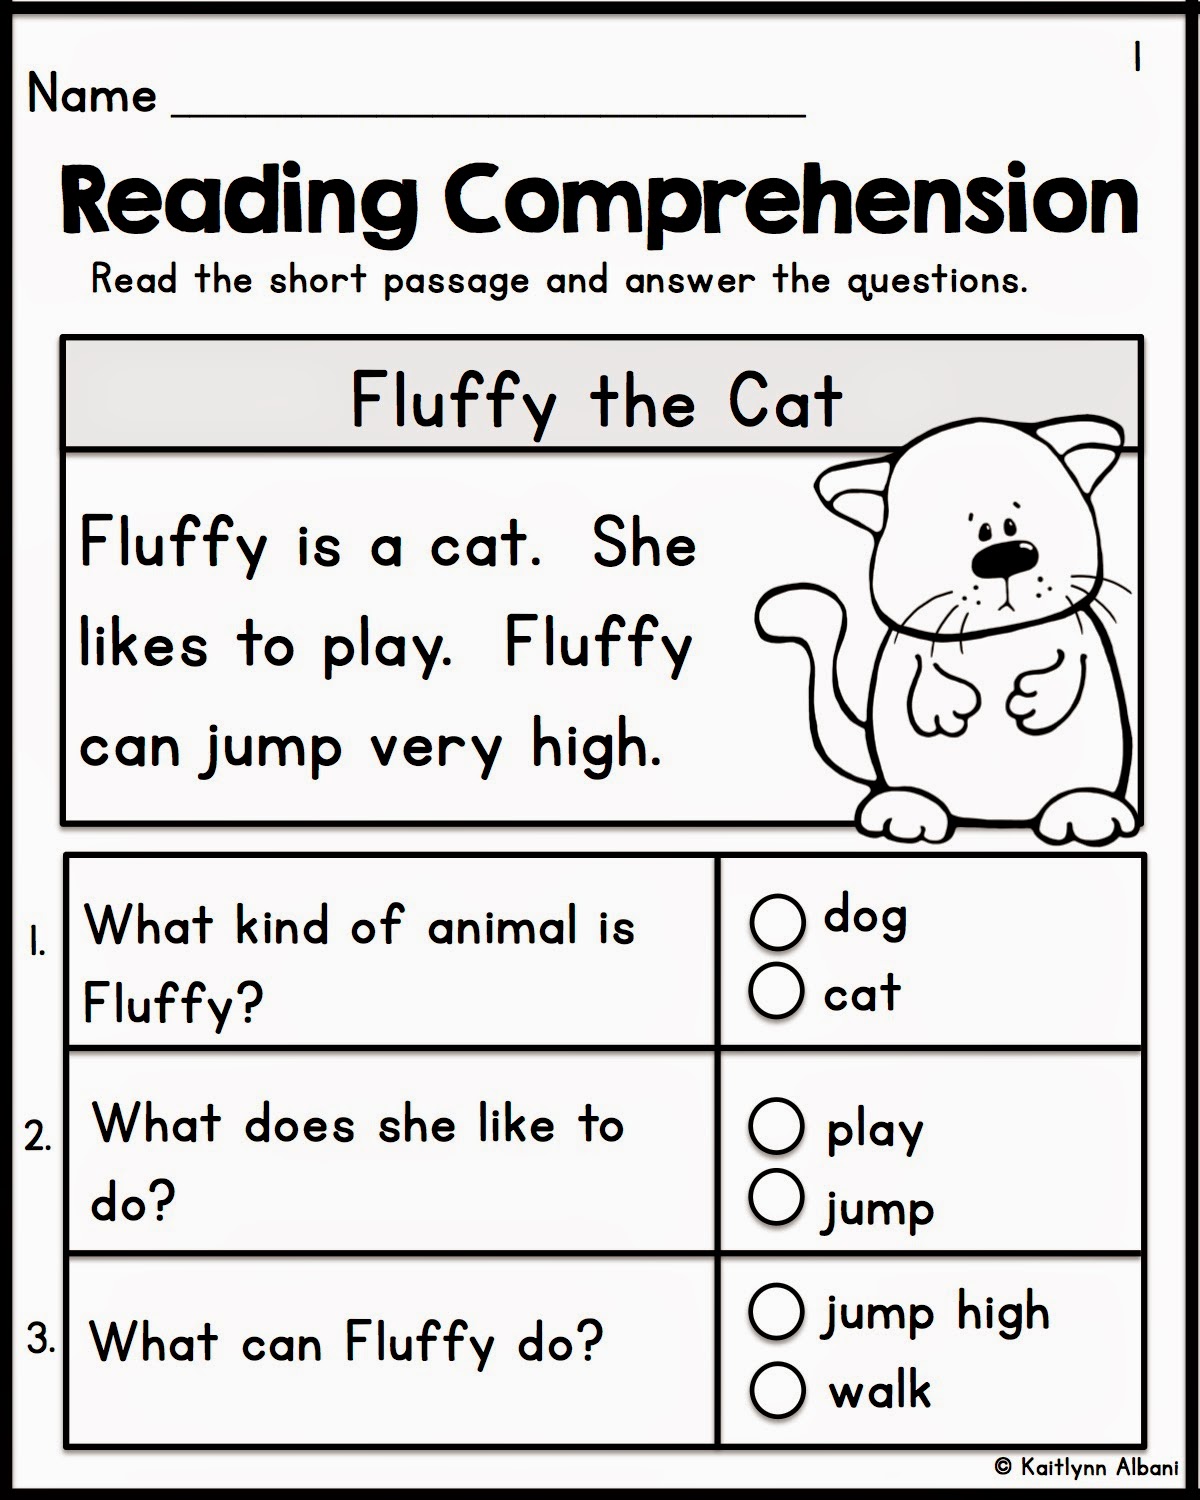 kindergarten-reading-comprehension-in-2021-reading-comprehension-top